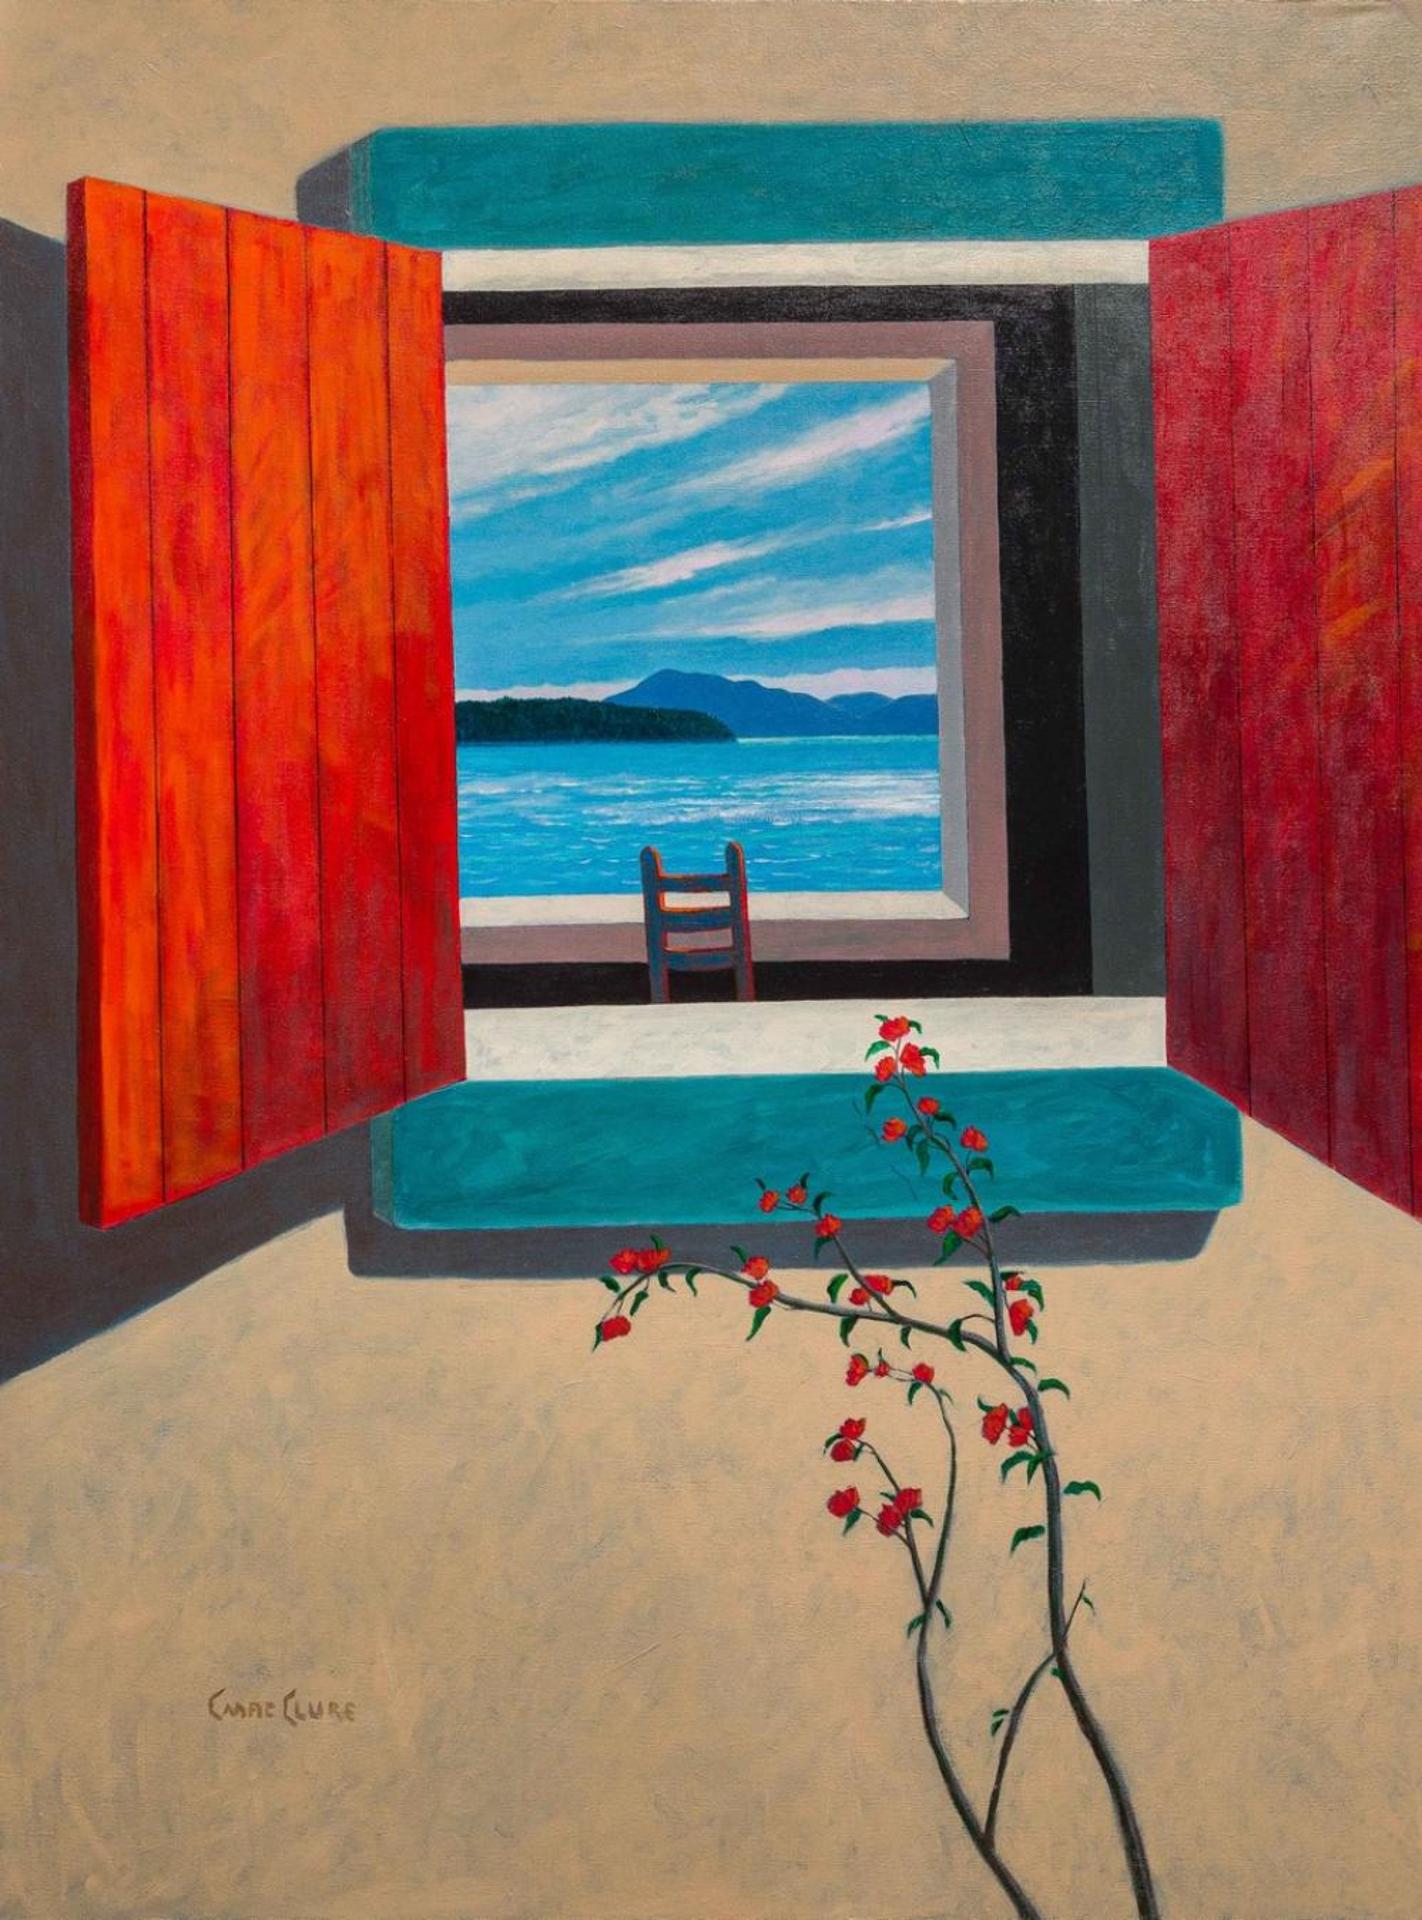 Chris MacClure (1943) - The Window